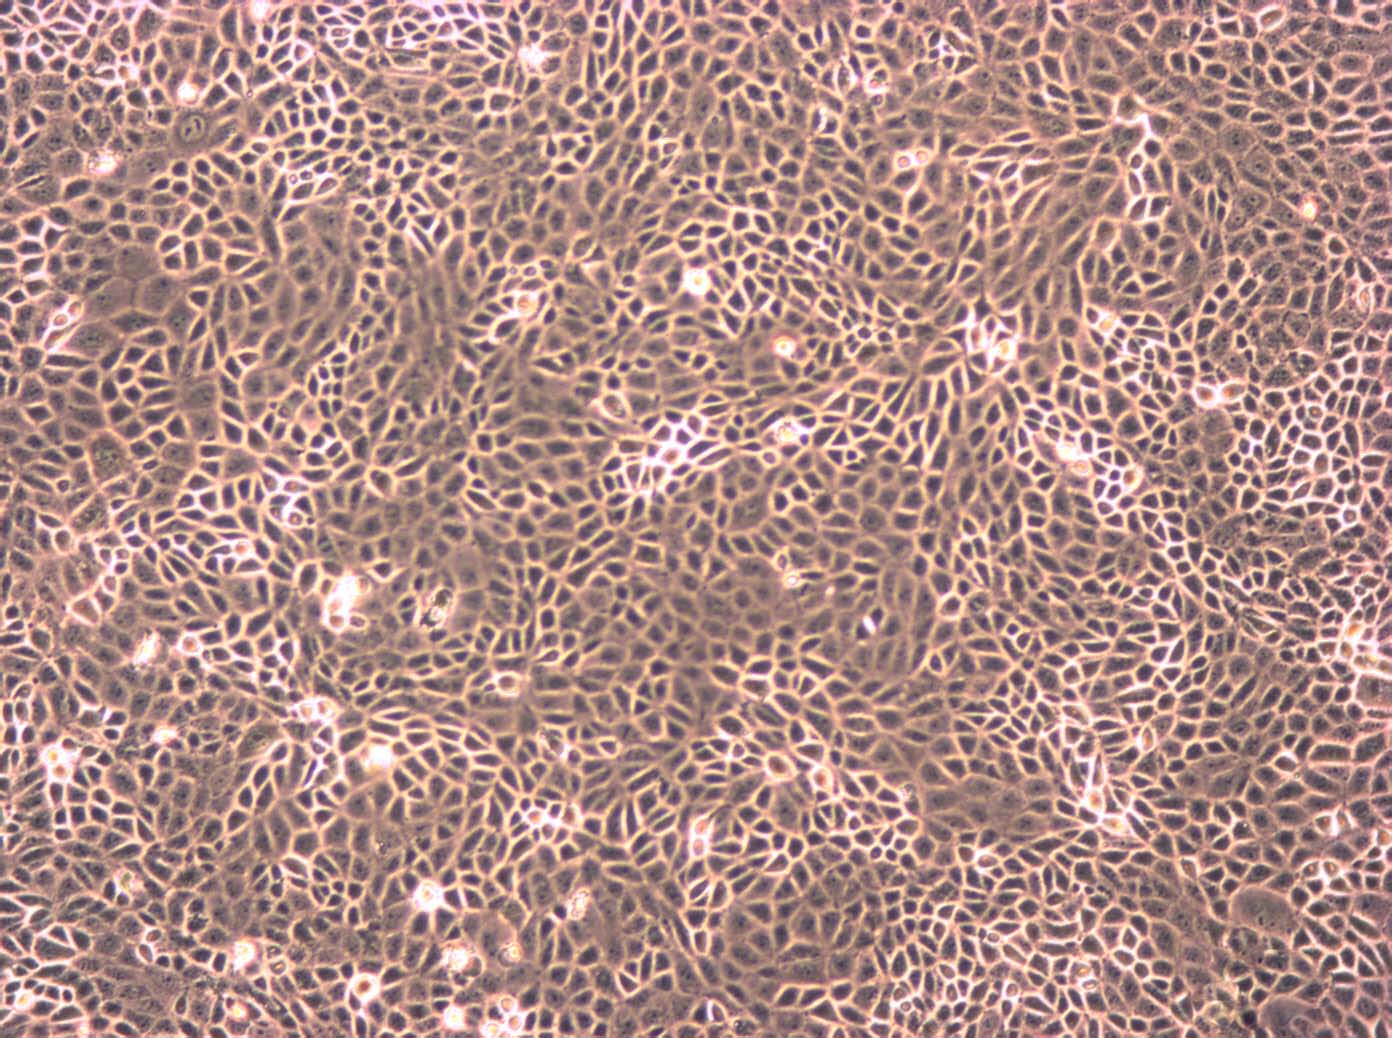 KYSE-140 Cells(赠送Str鉴定报告)|人食管鳞癌细胞